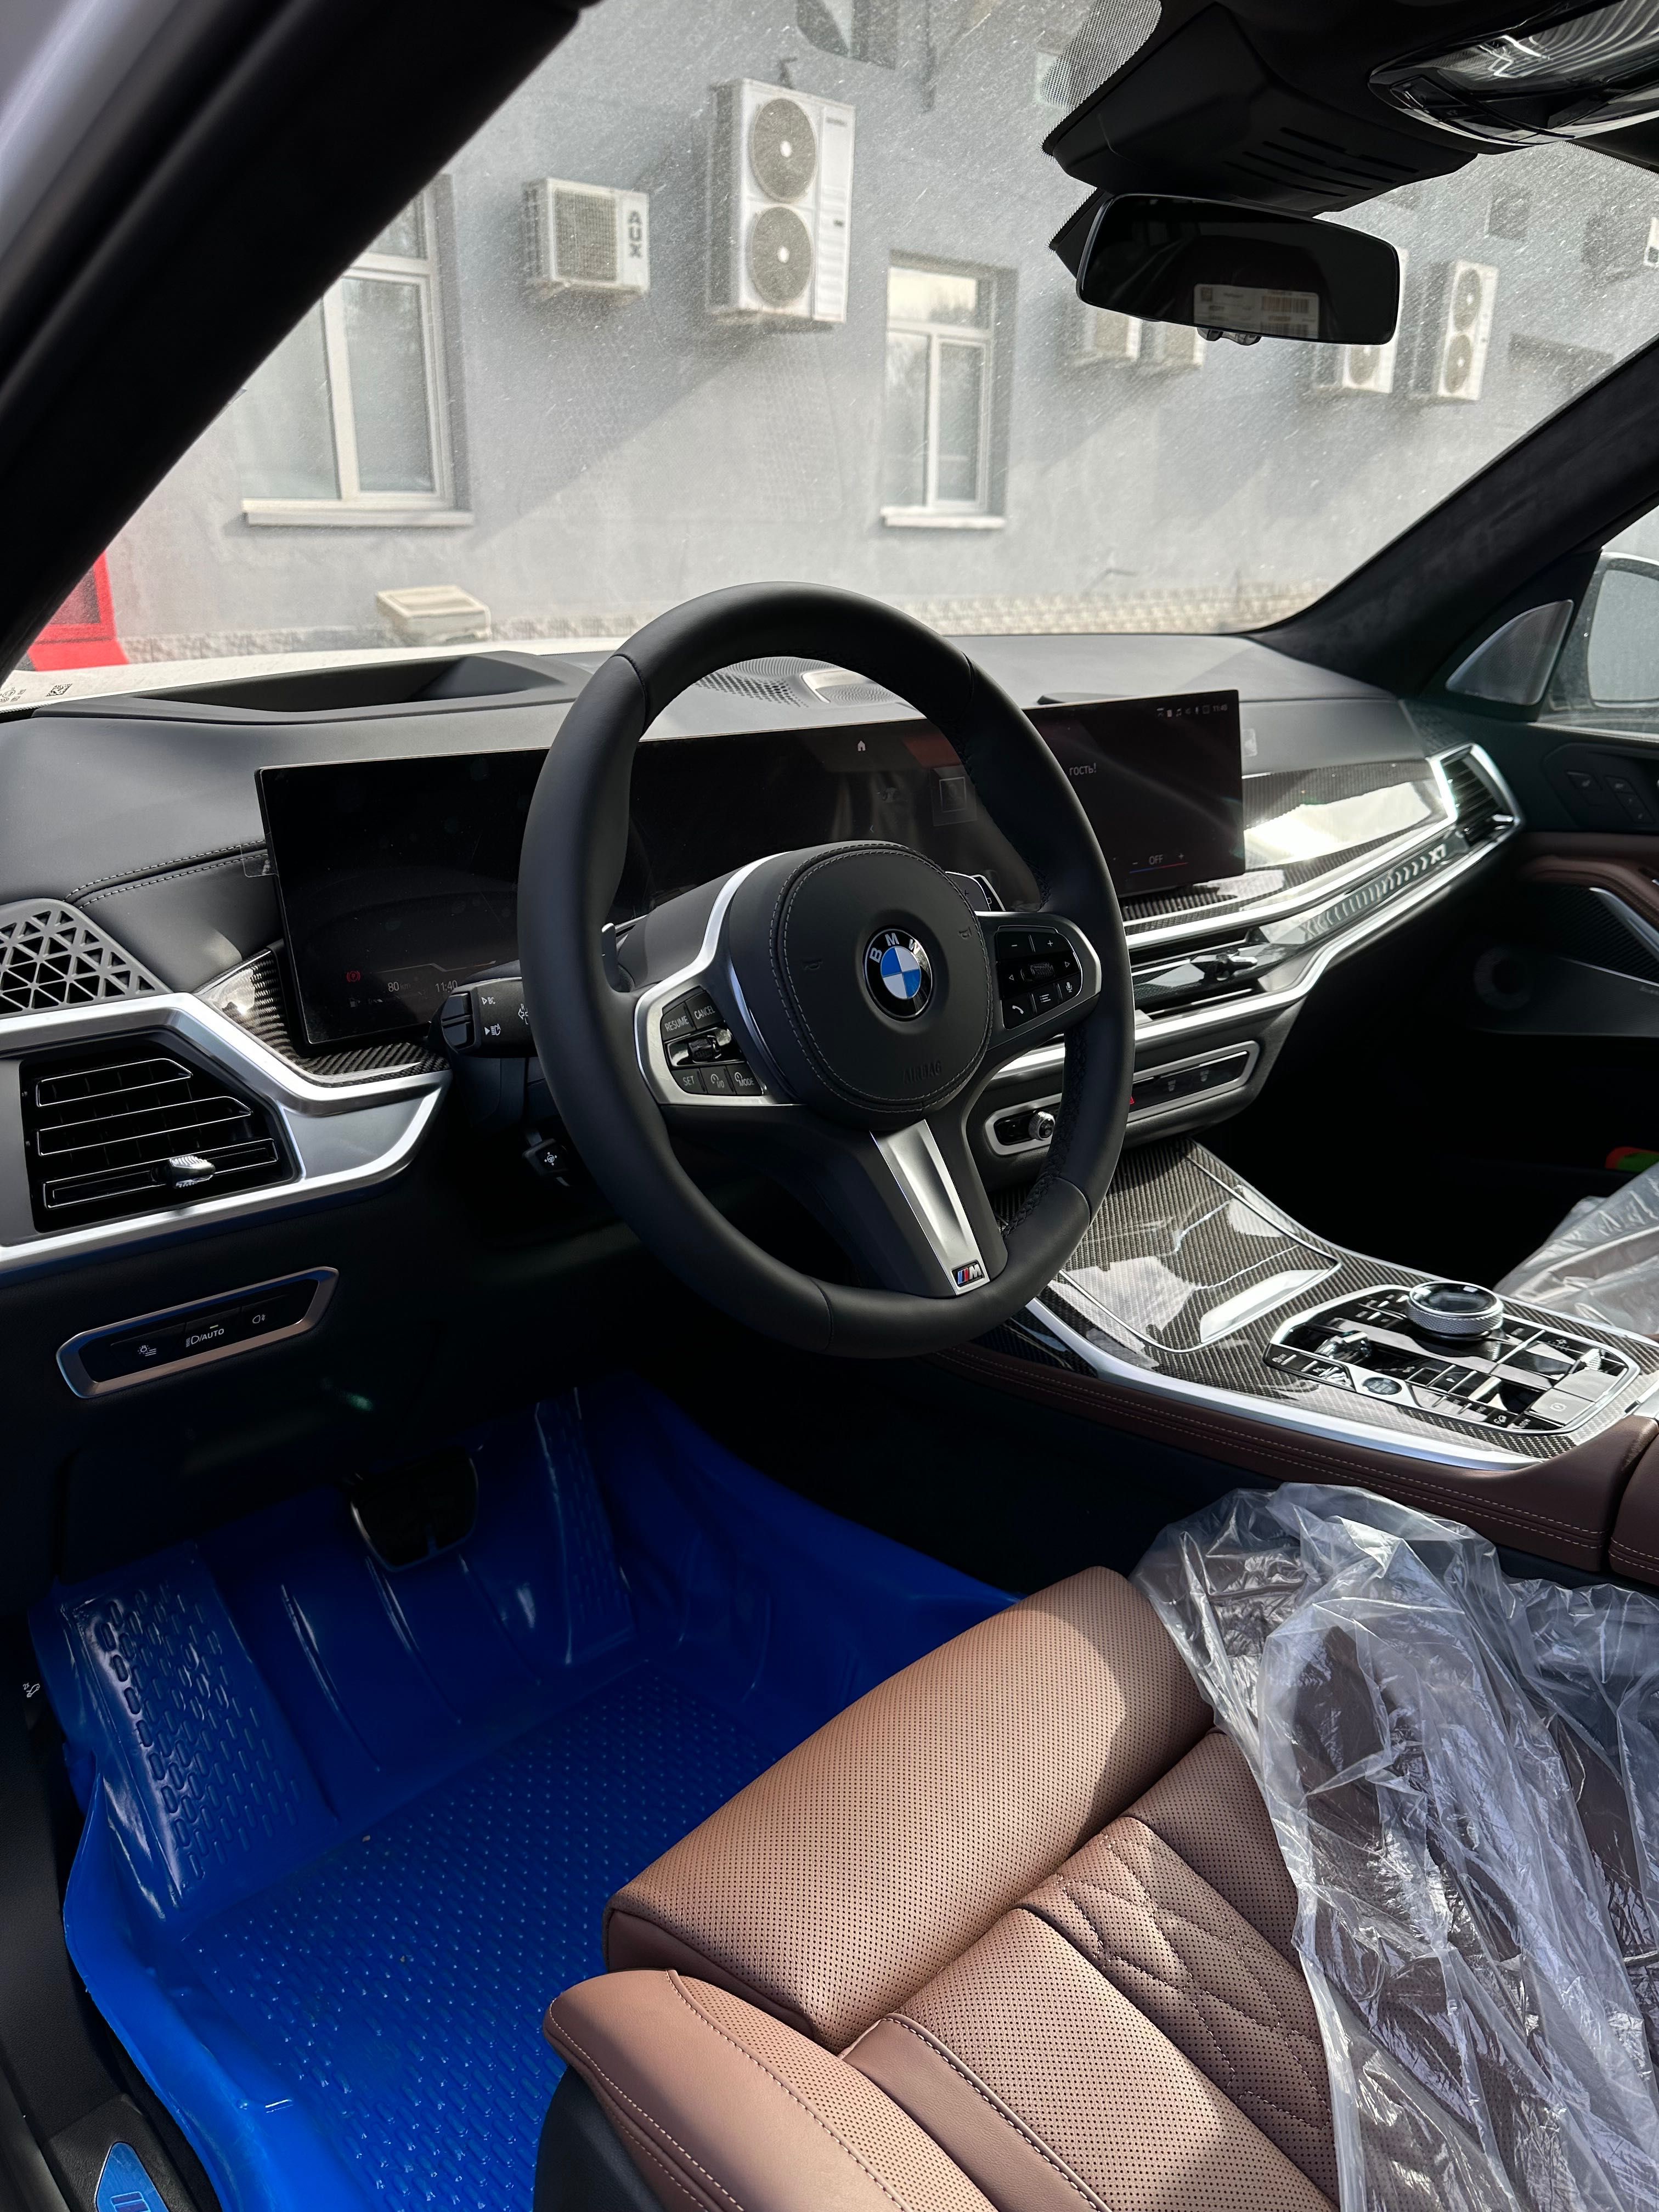 Продам новый BMW X7 xDrive40i с гарантией+счёт справка